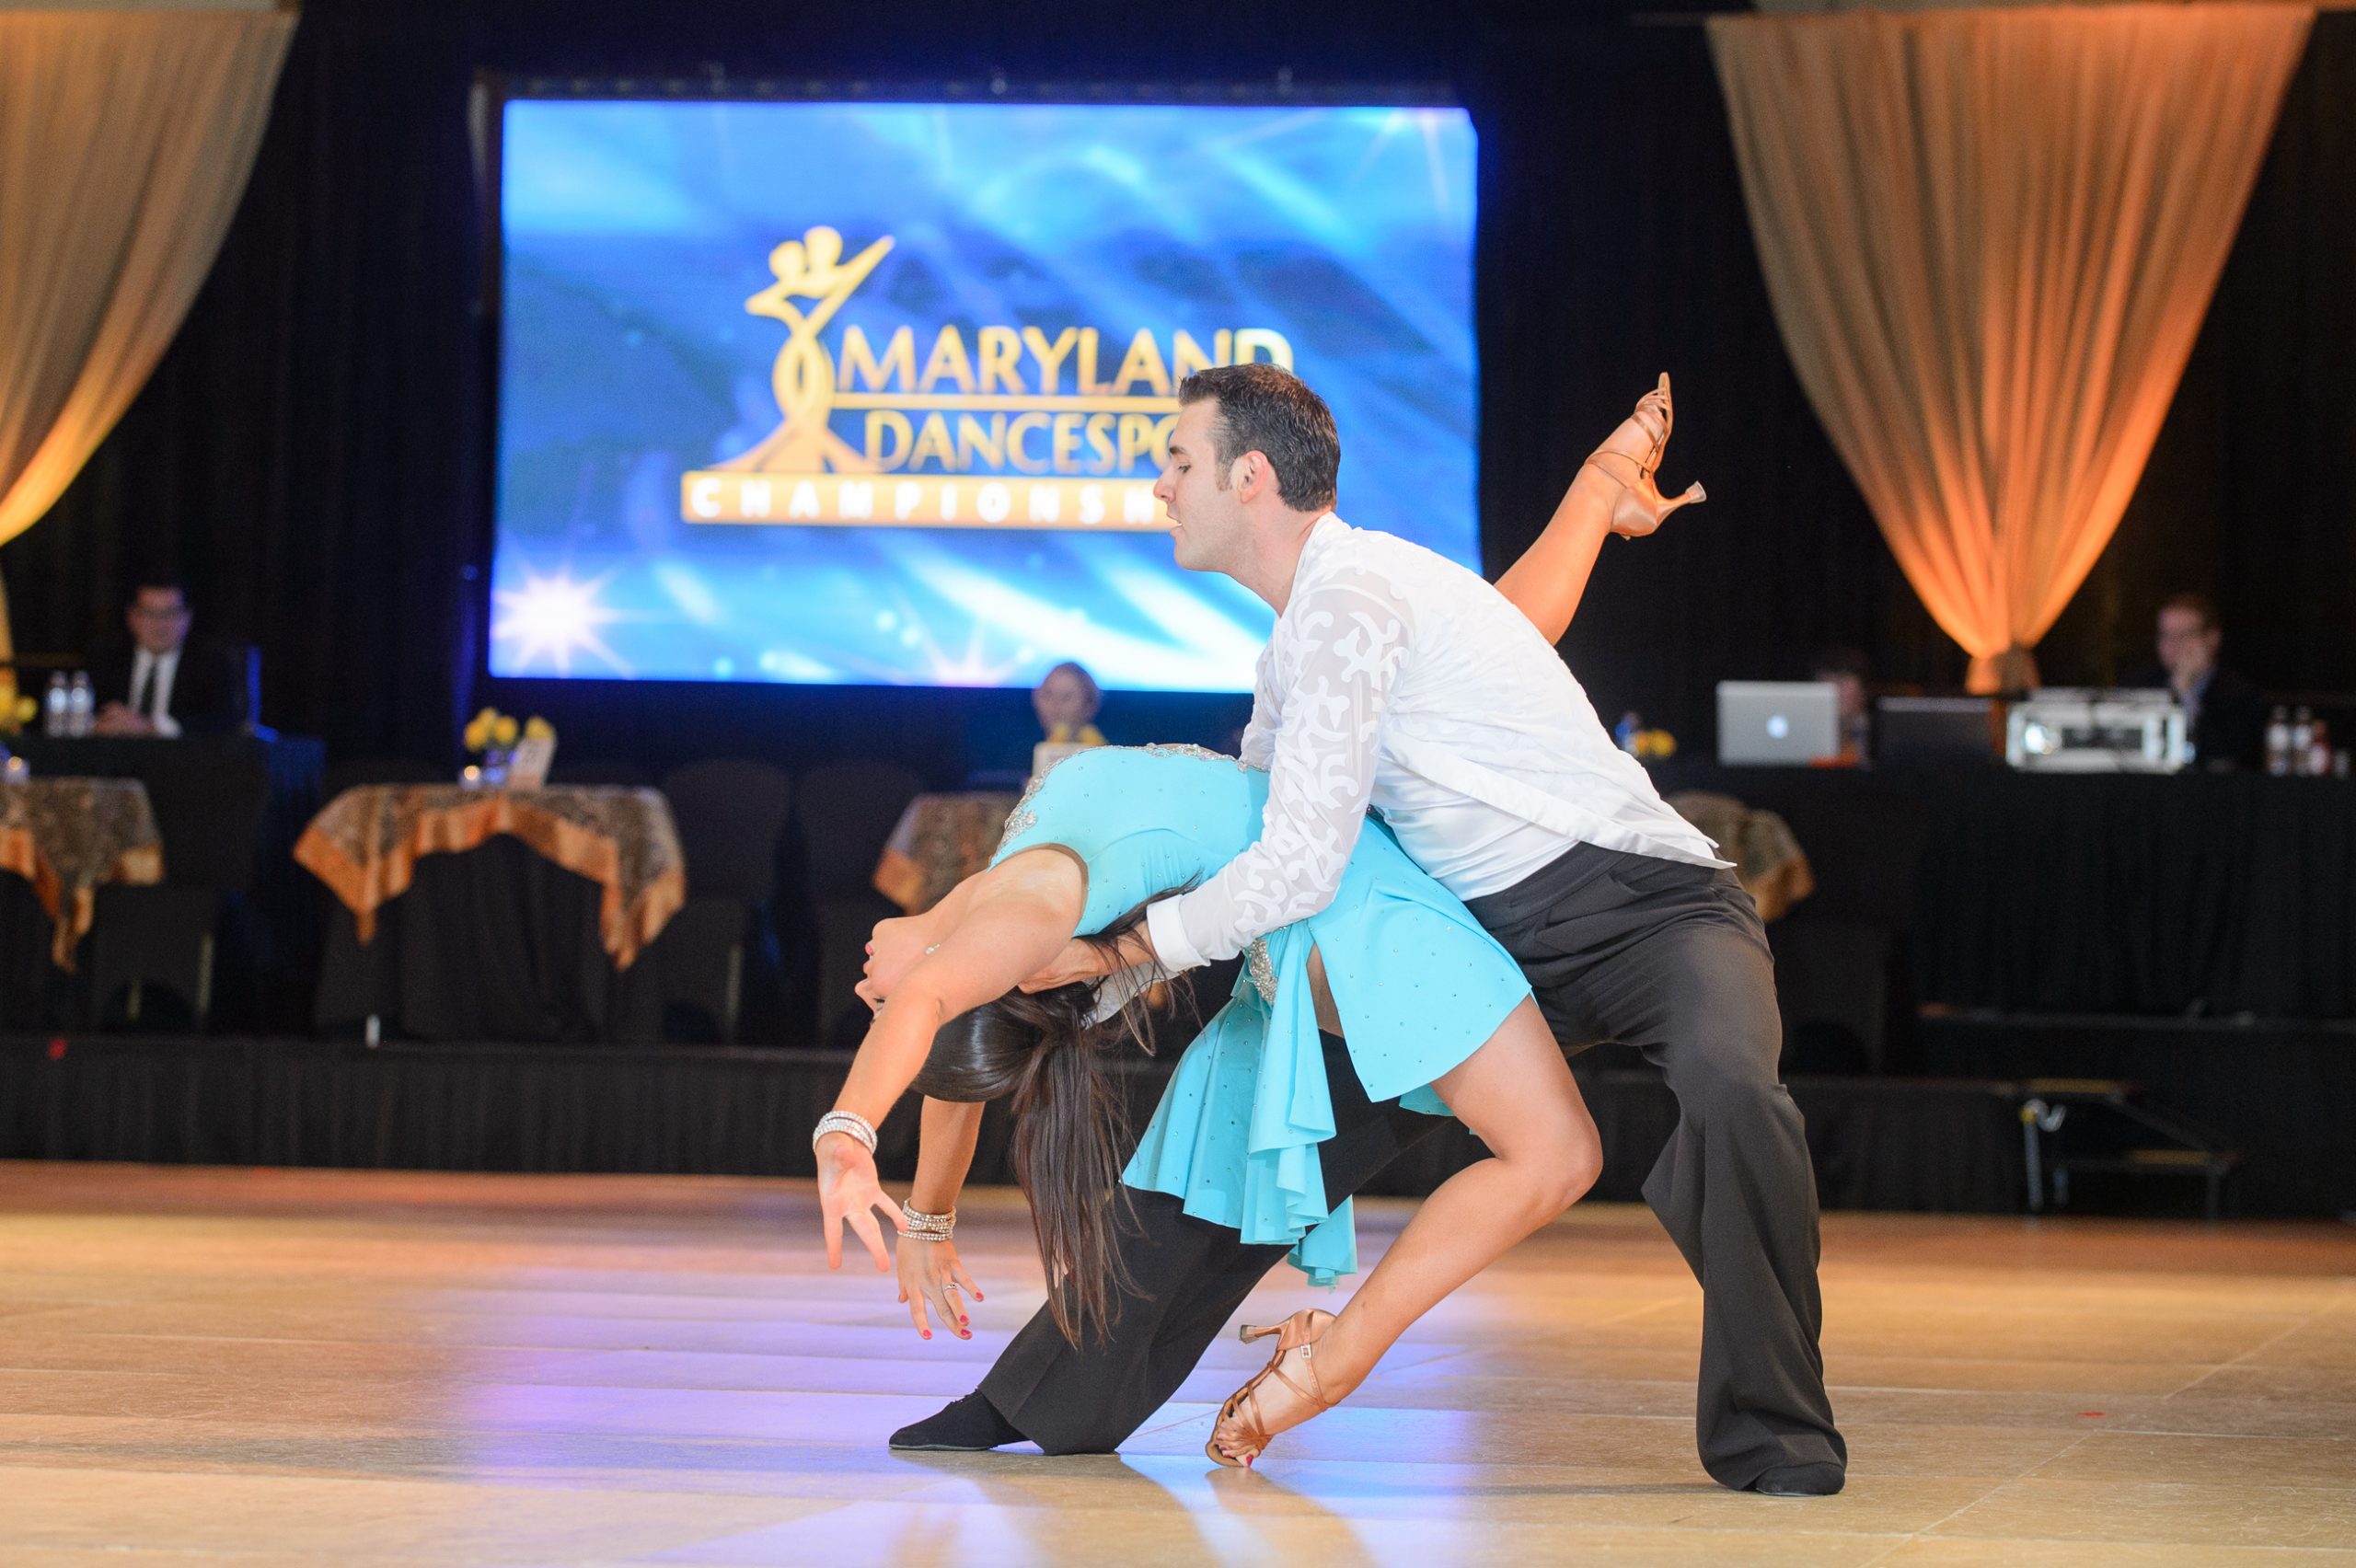 Dancers competing at the Maryland Dancesport Championships ©TimeLine Media